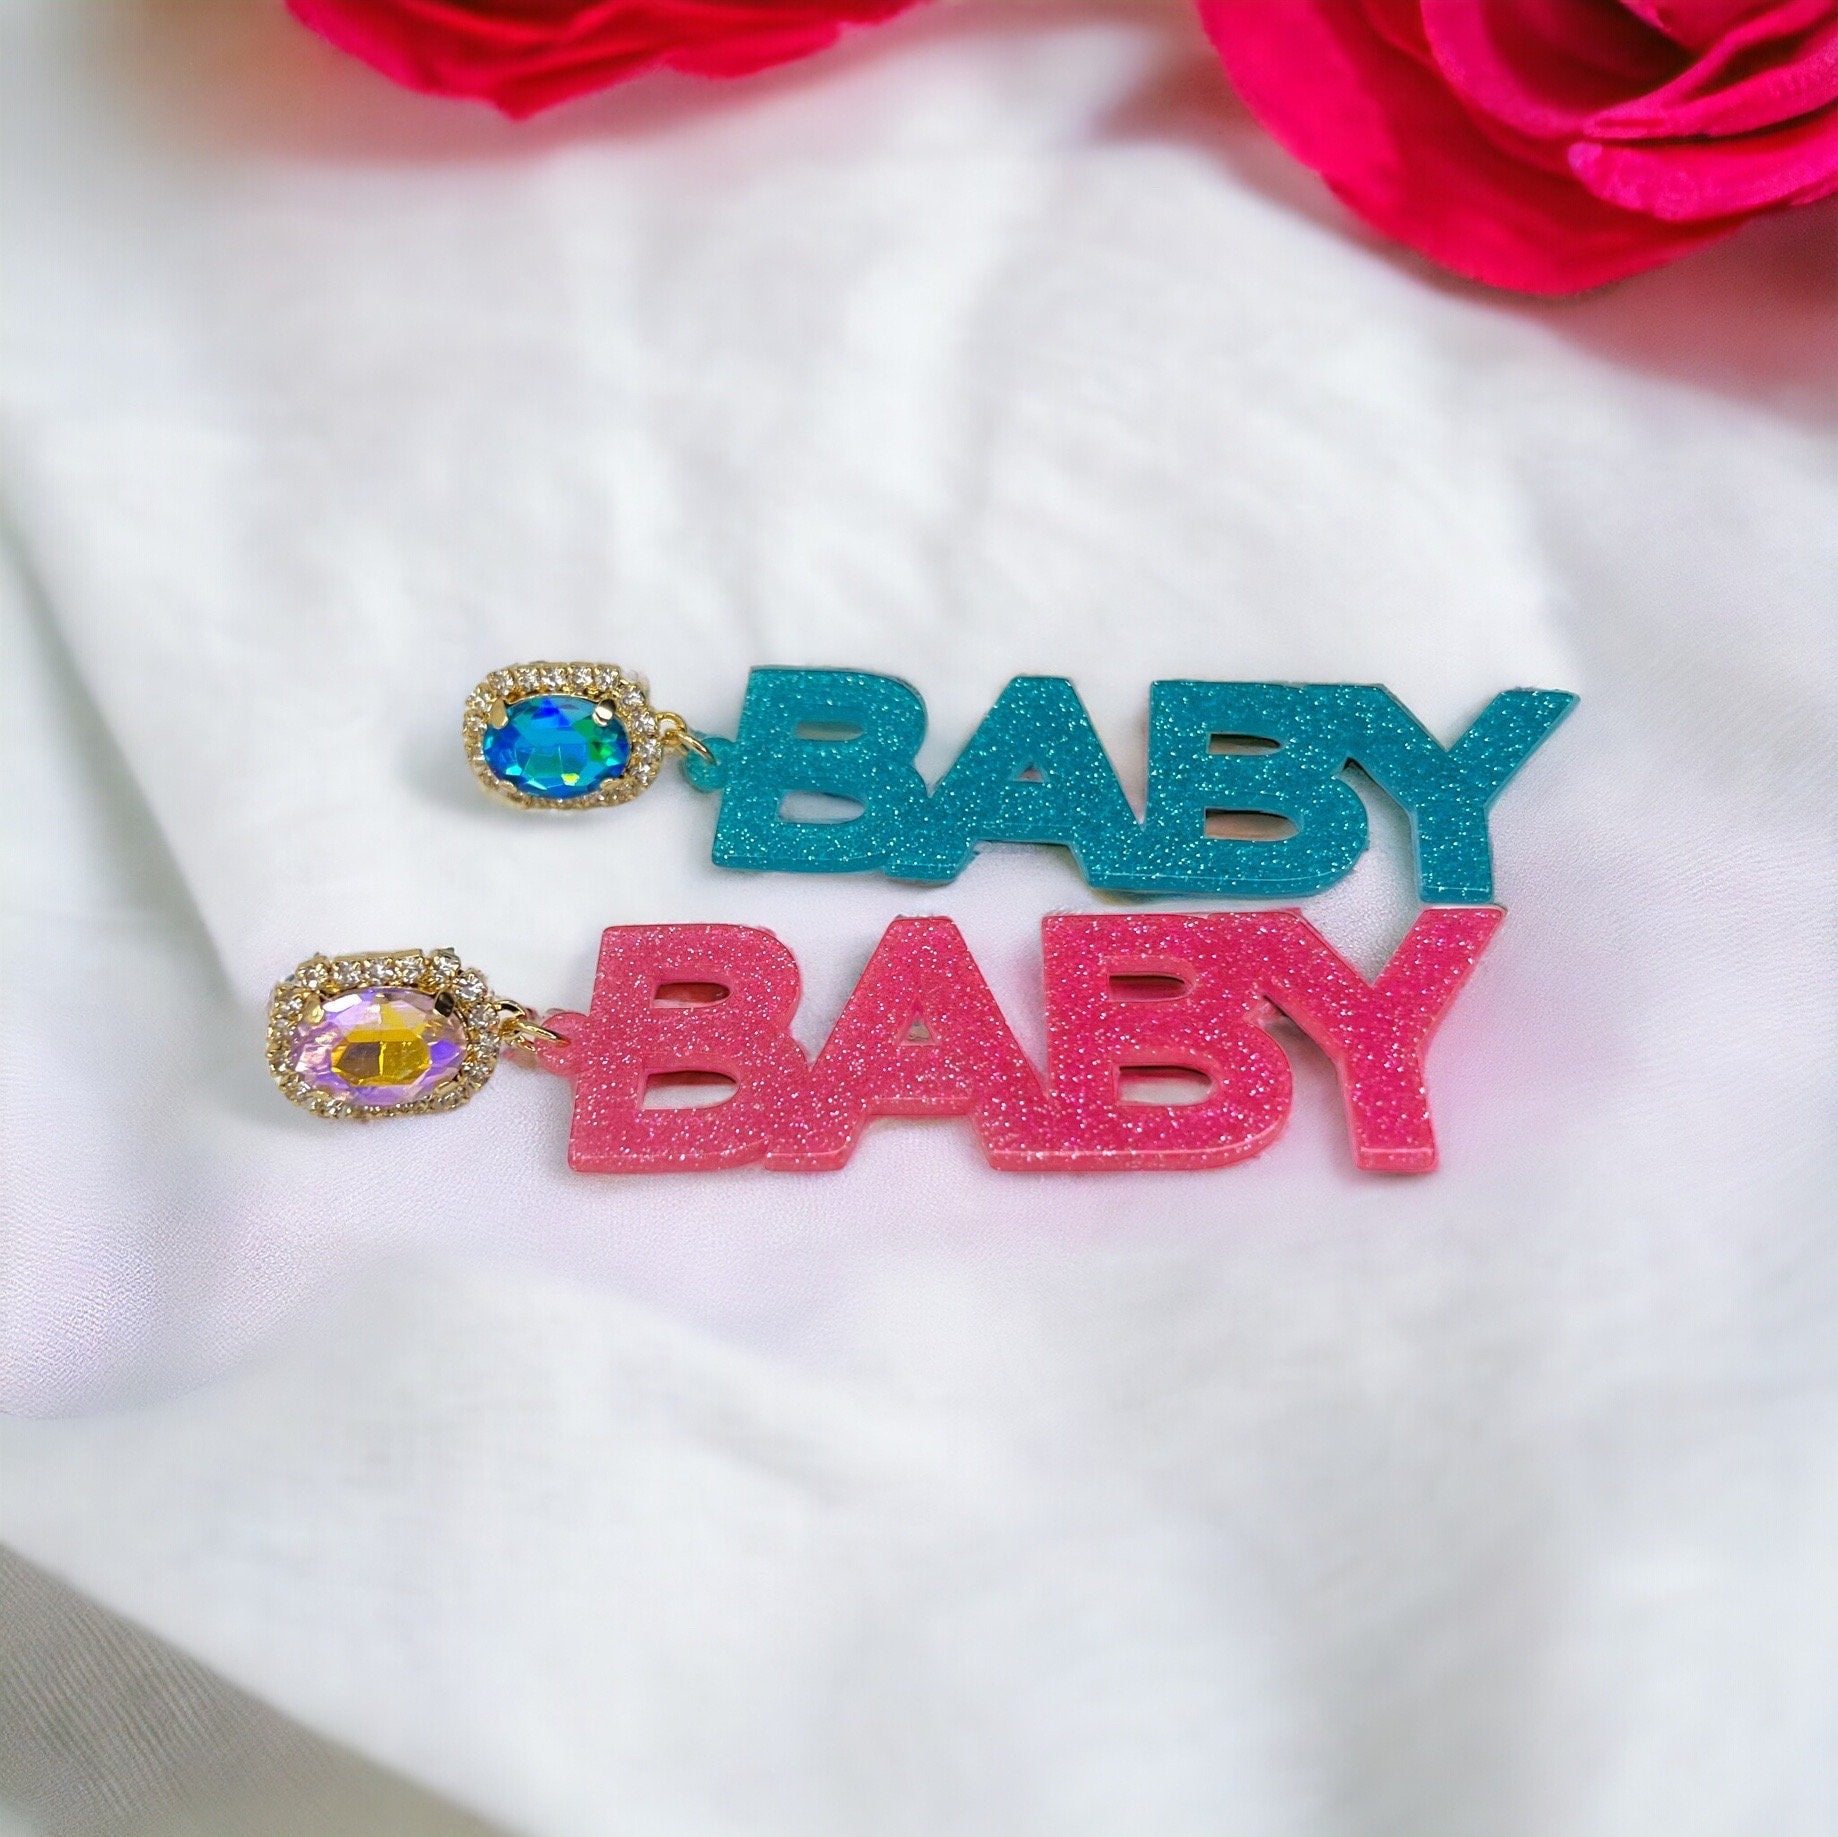 Gender Reveal Earrings - Baby Shower, New Mom, Mother’s Day, Mom Earrings, Momma Earrings, Mama Earrings, Team Pink, Team Blue, Pink or Blue